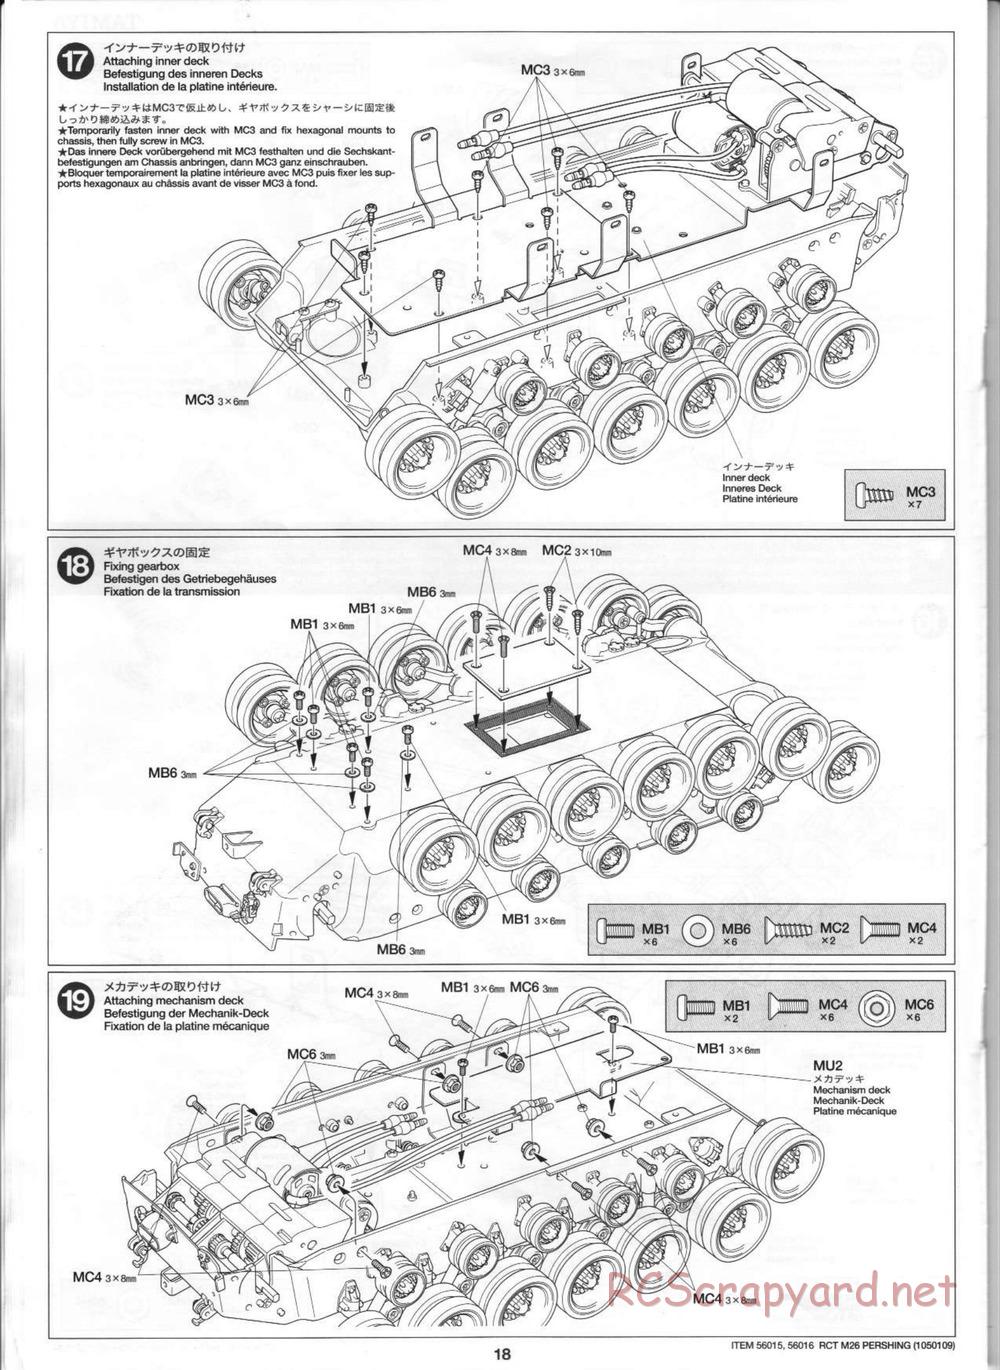 Tamiya - M26 Pershing - 1/16 Scale Chassis - Manual - Page 18